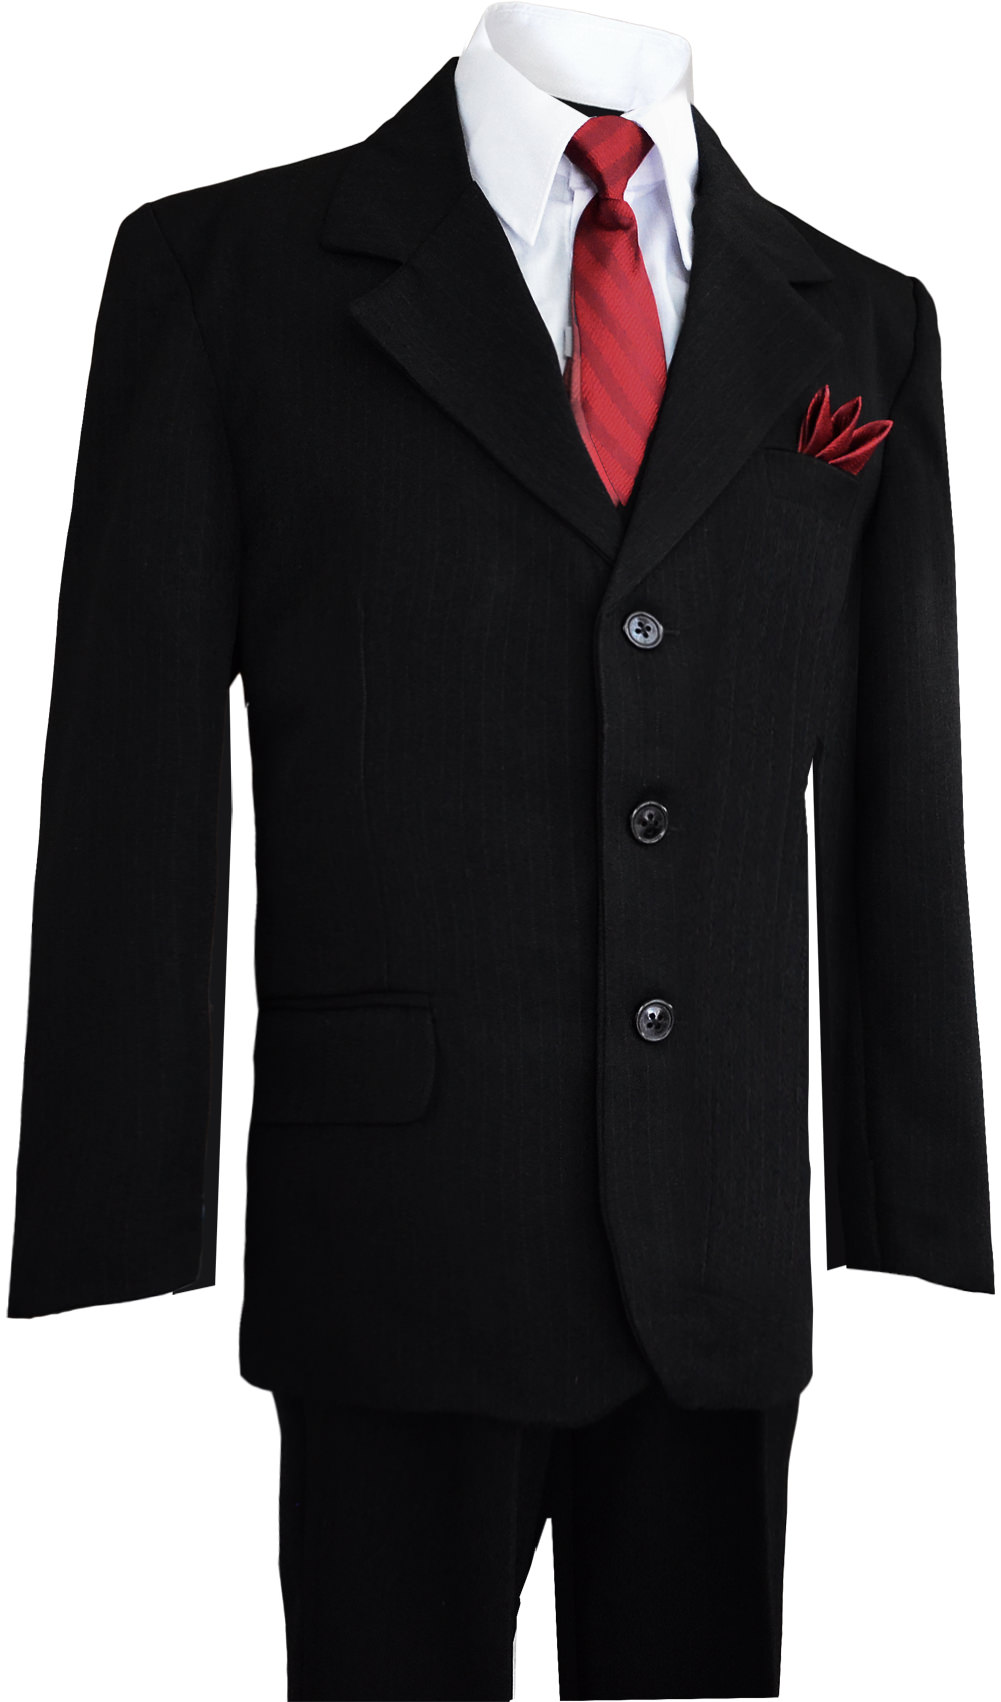 Boys Pinstripe Suit in Black with Dark Red Brugndy Tie 2T 3T 4T